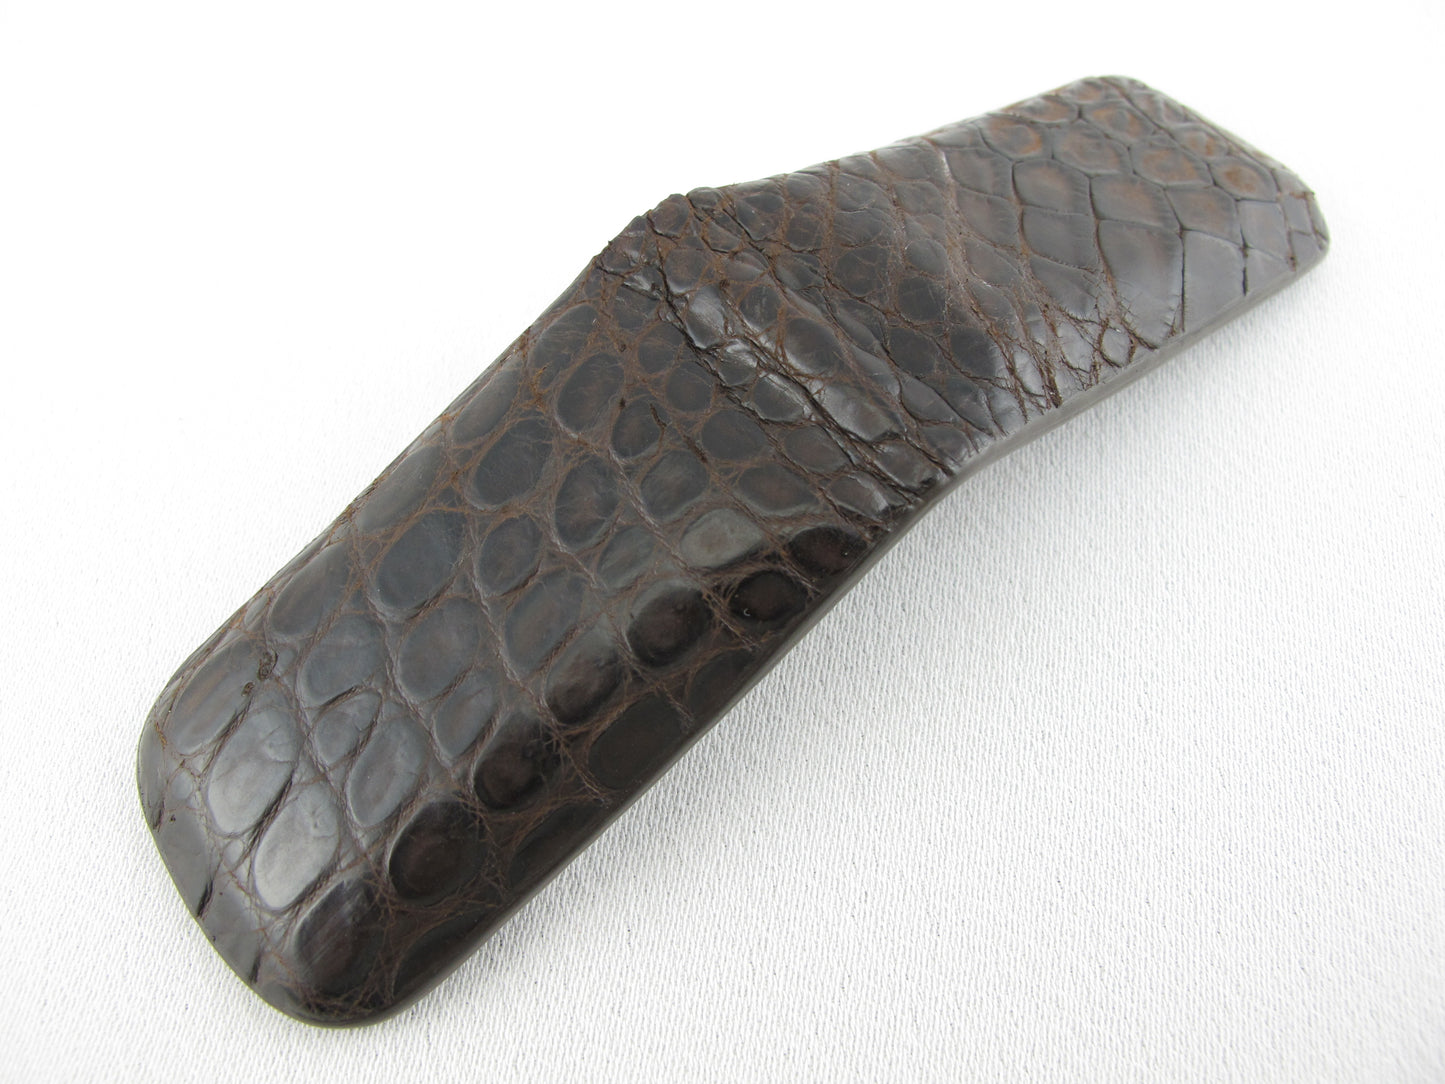 Genuine Crocodile Skin Leather Magnetic Money Clip Banknote Wallet